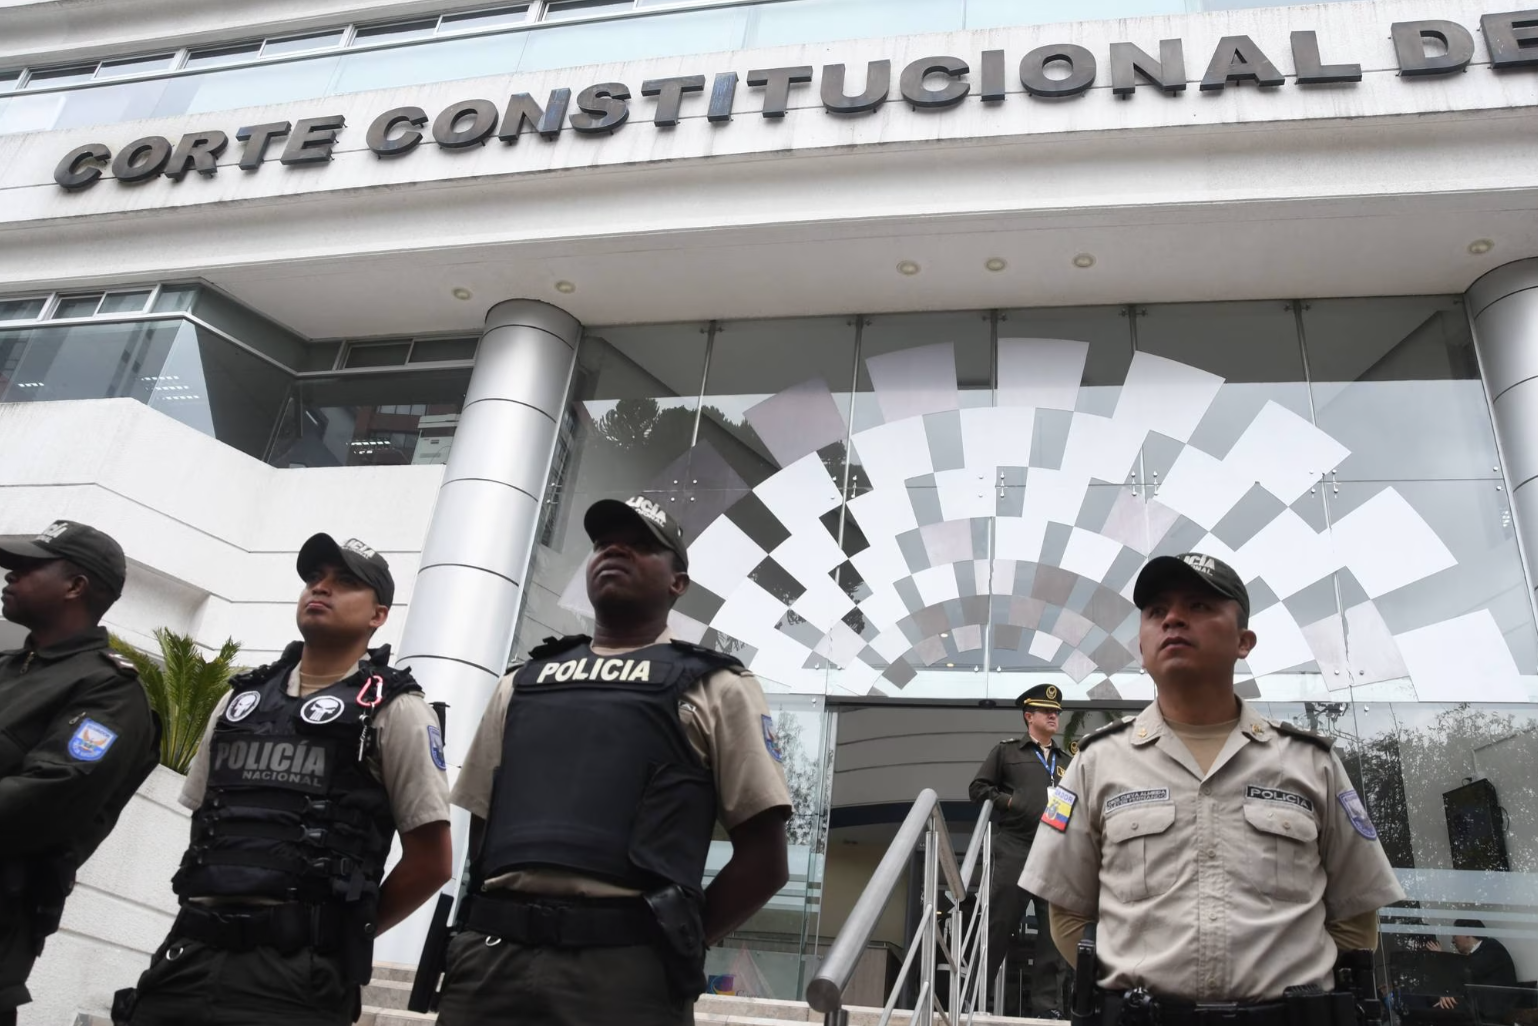 Ecuadorian eyes on Constitutional Court after cross death